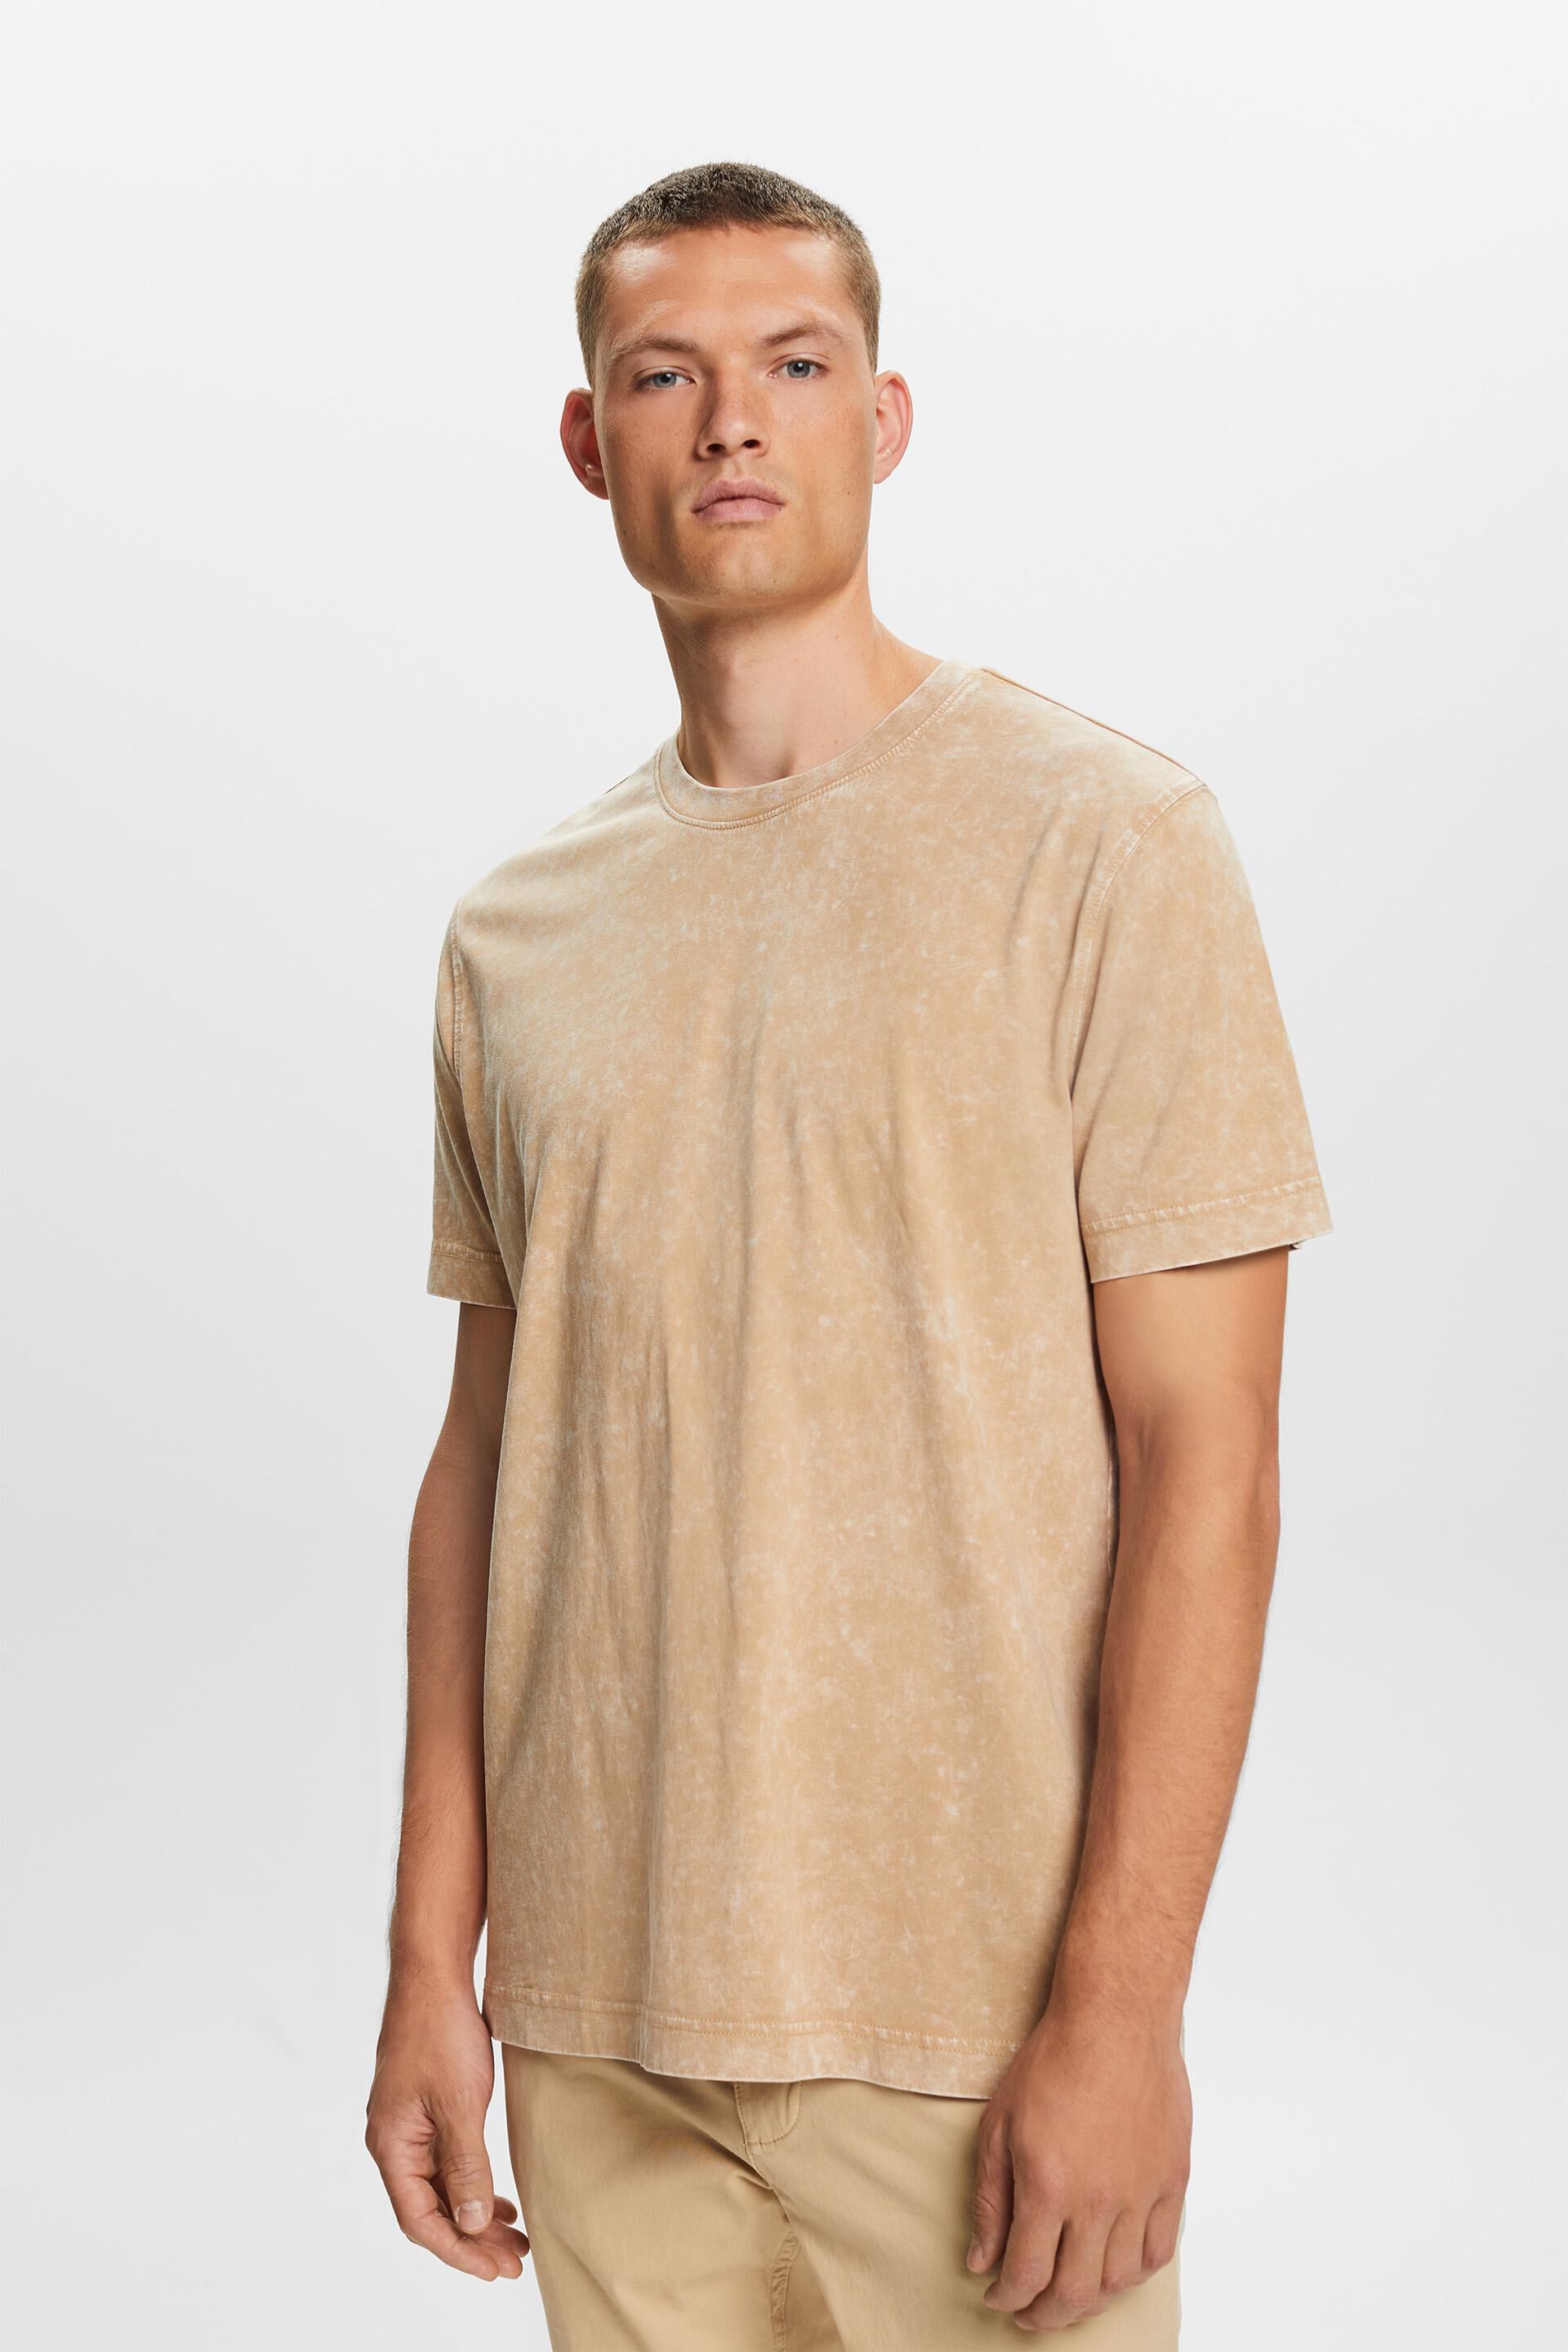 Esprit cotton Stone 100% washed T-shirt,